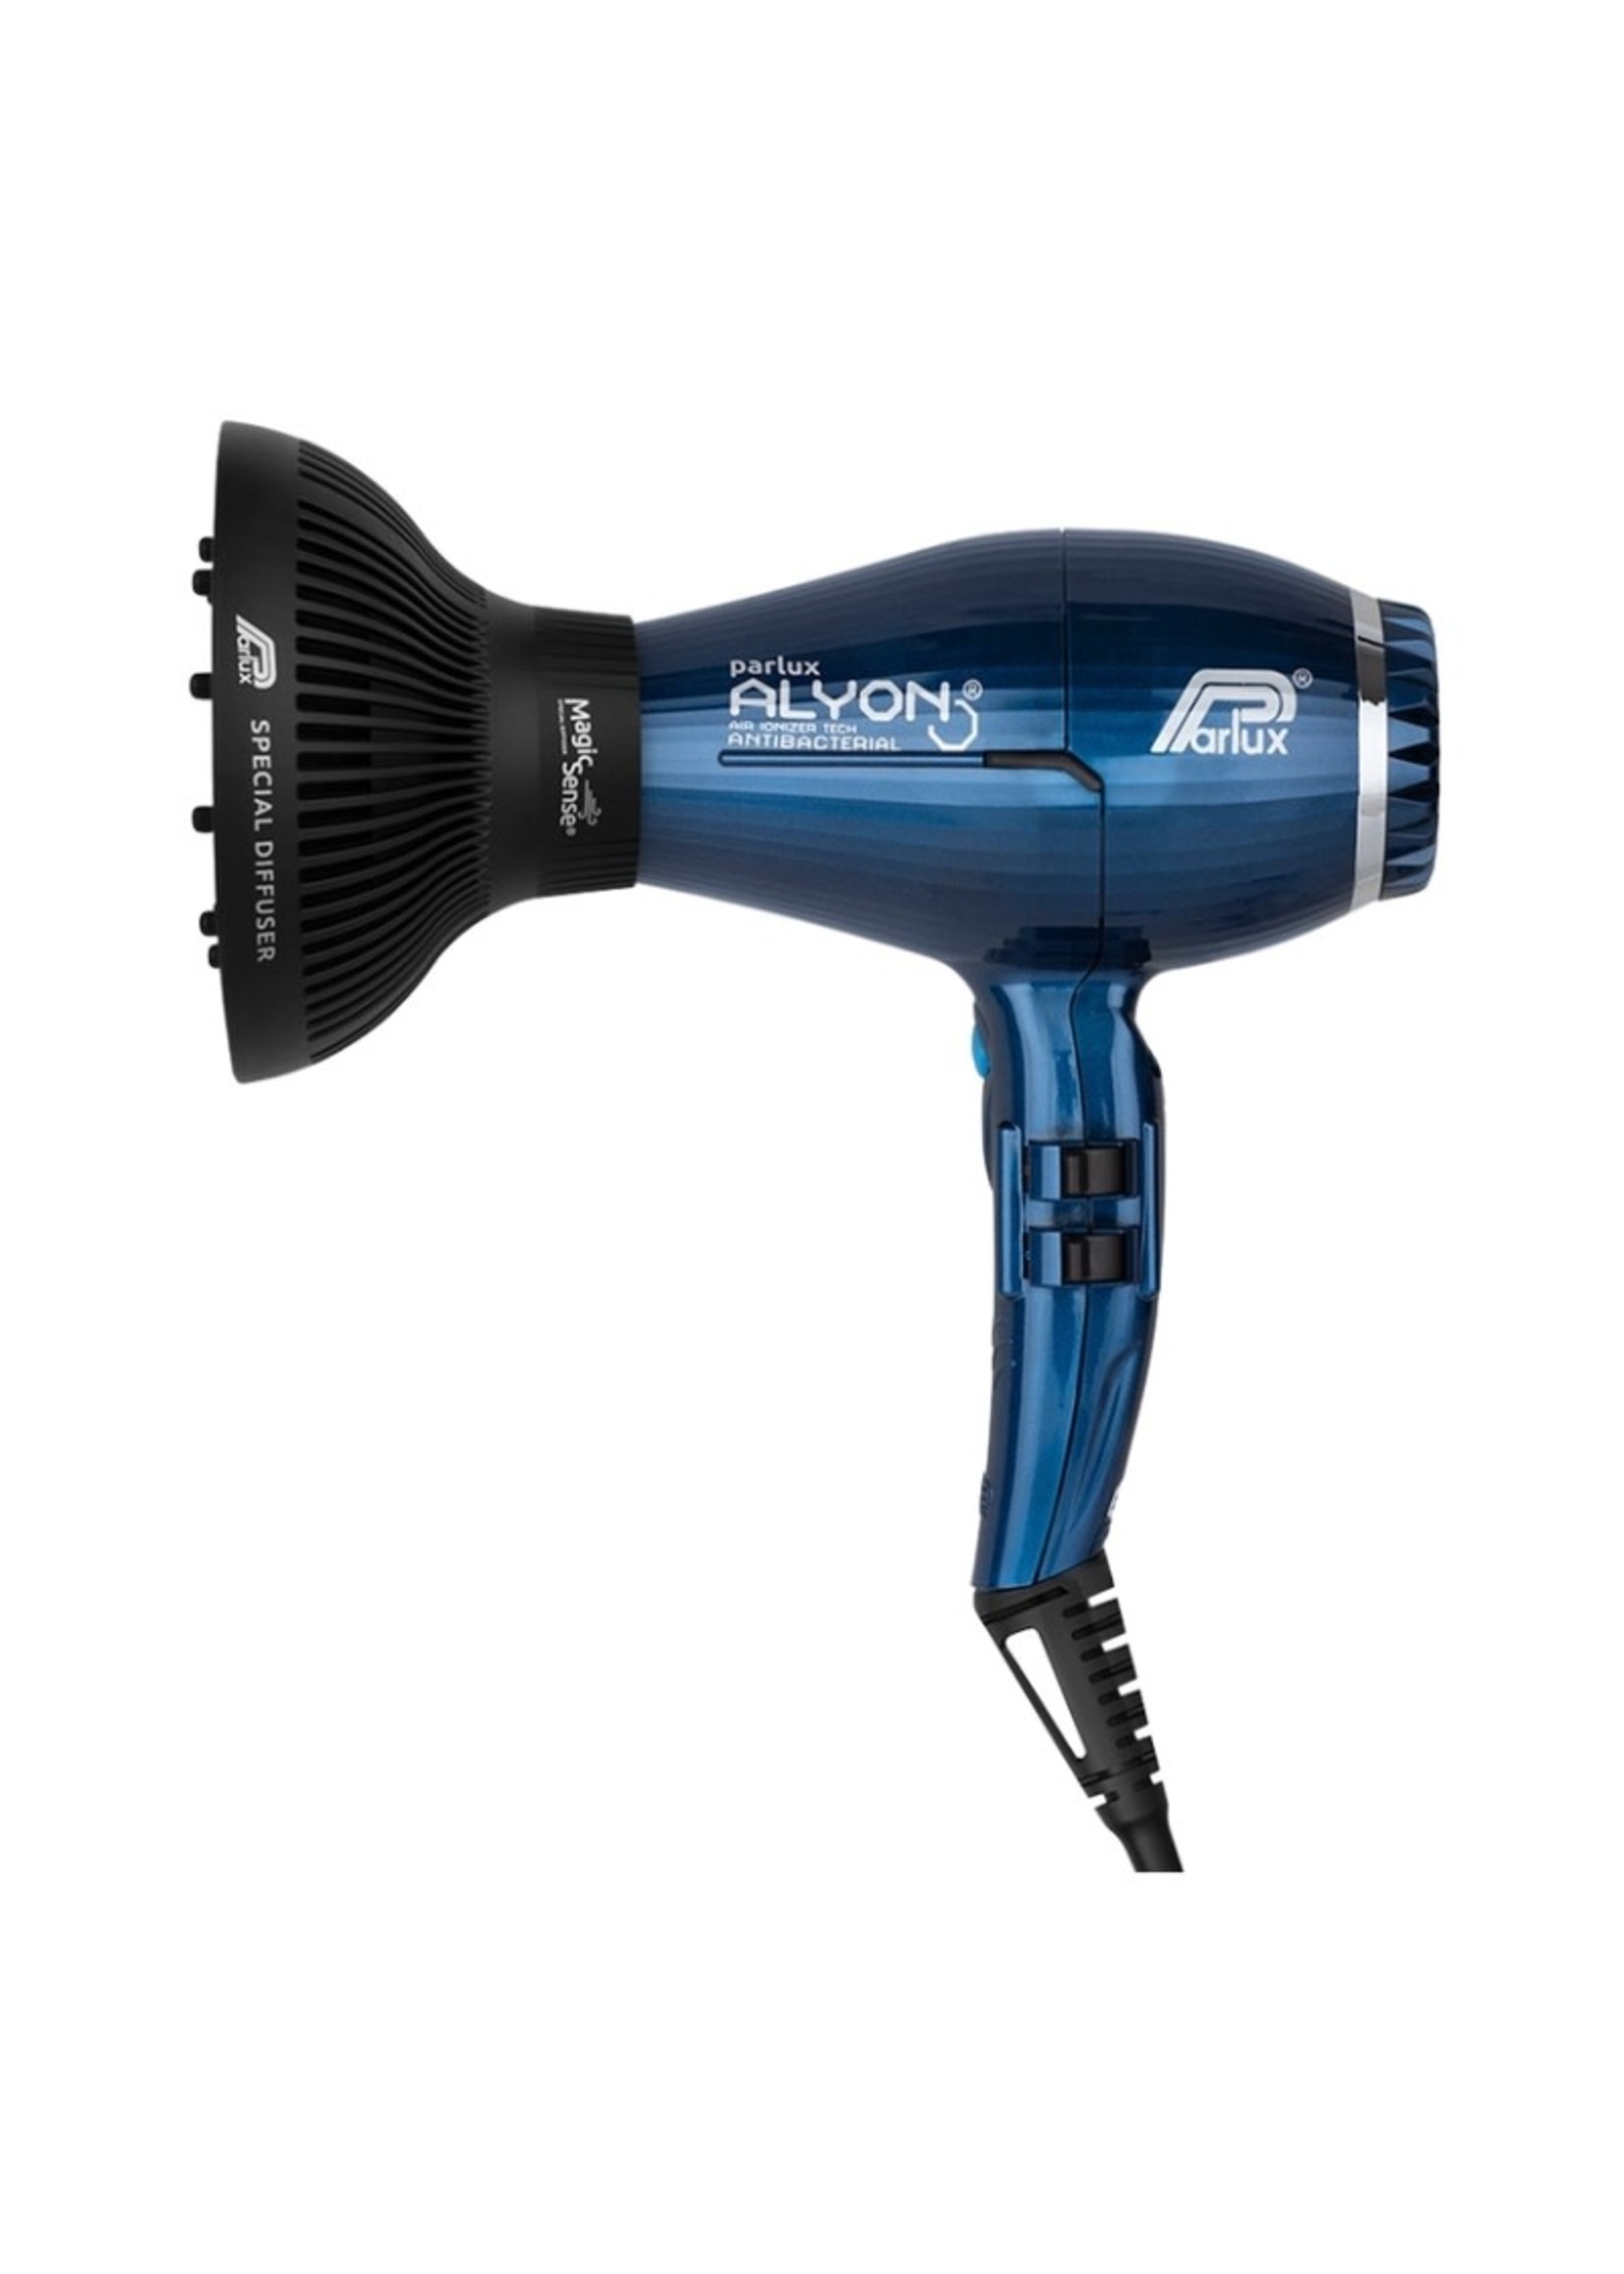 Parlux Parlux Alyon Air Ionizer 2250W Tech Hairdryer With Diffuser - Midnight Blue